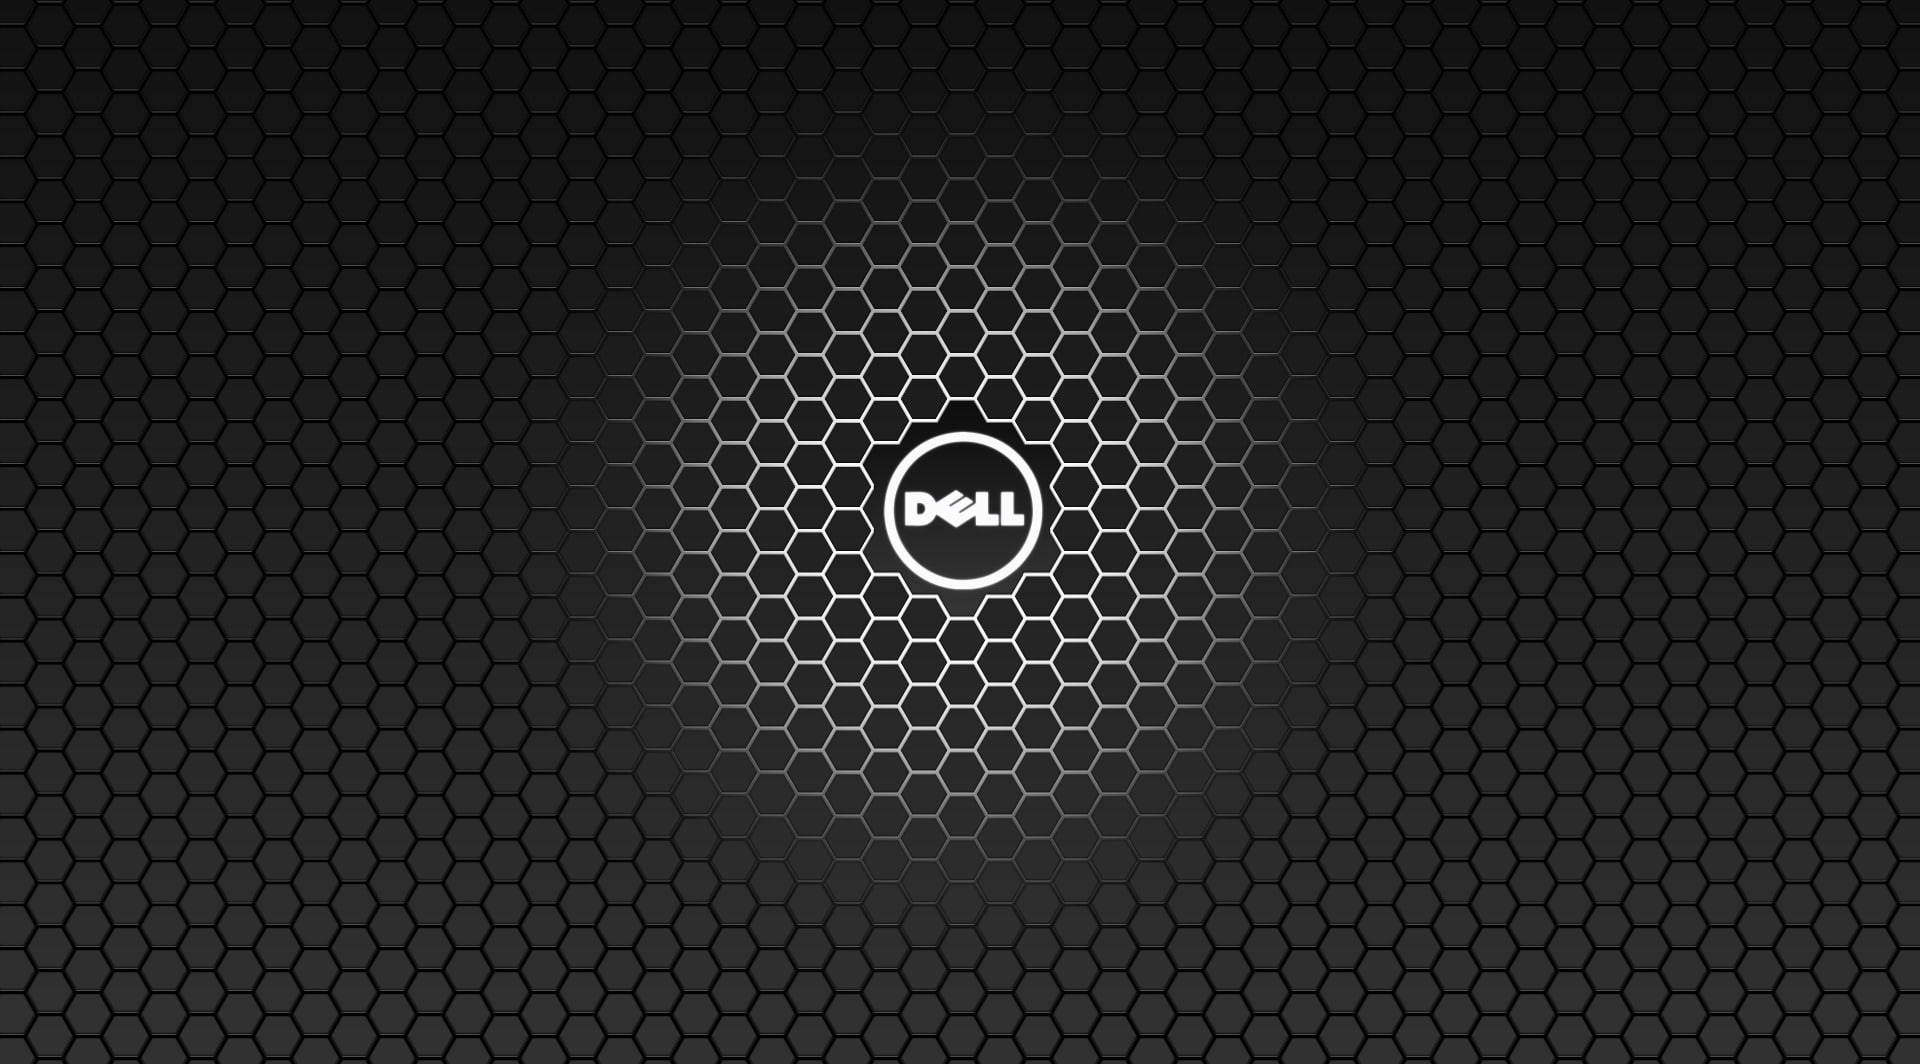 Hexagonal Mesh Dell Laptop Background